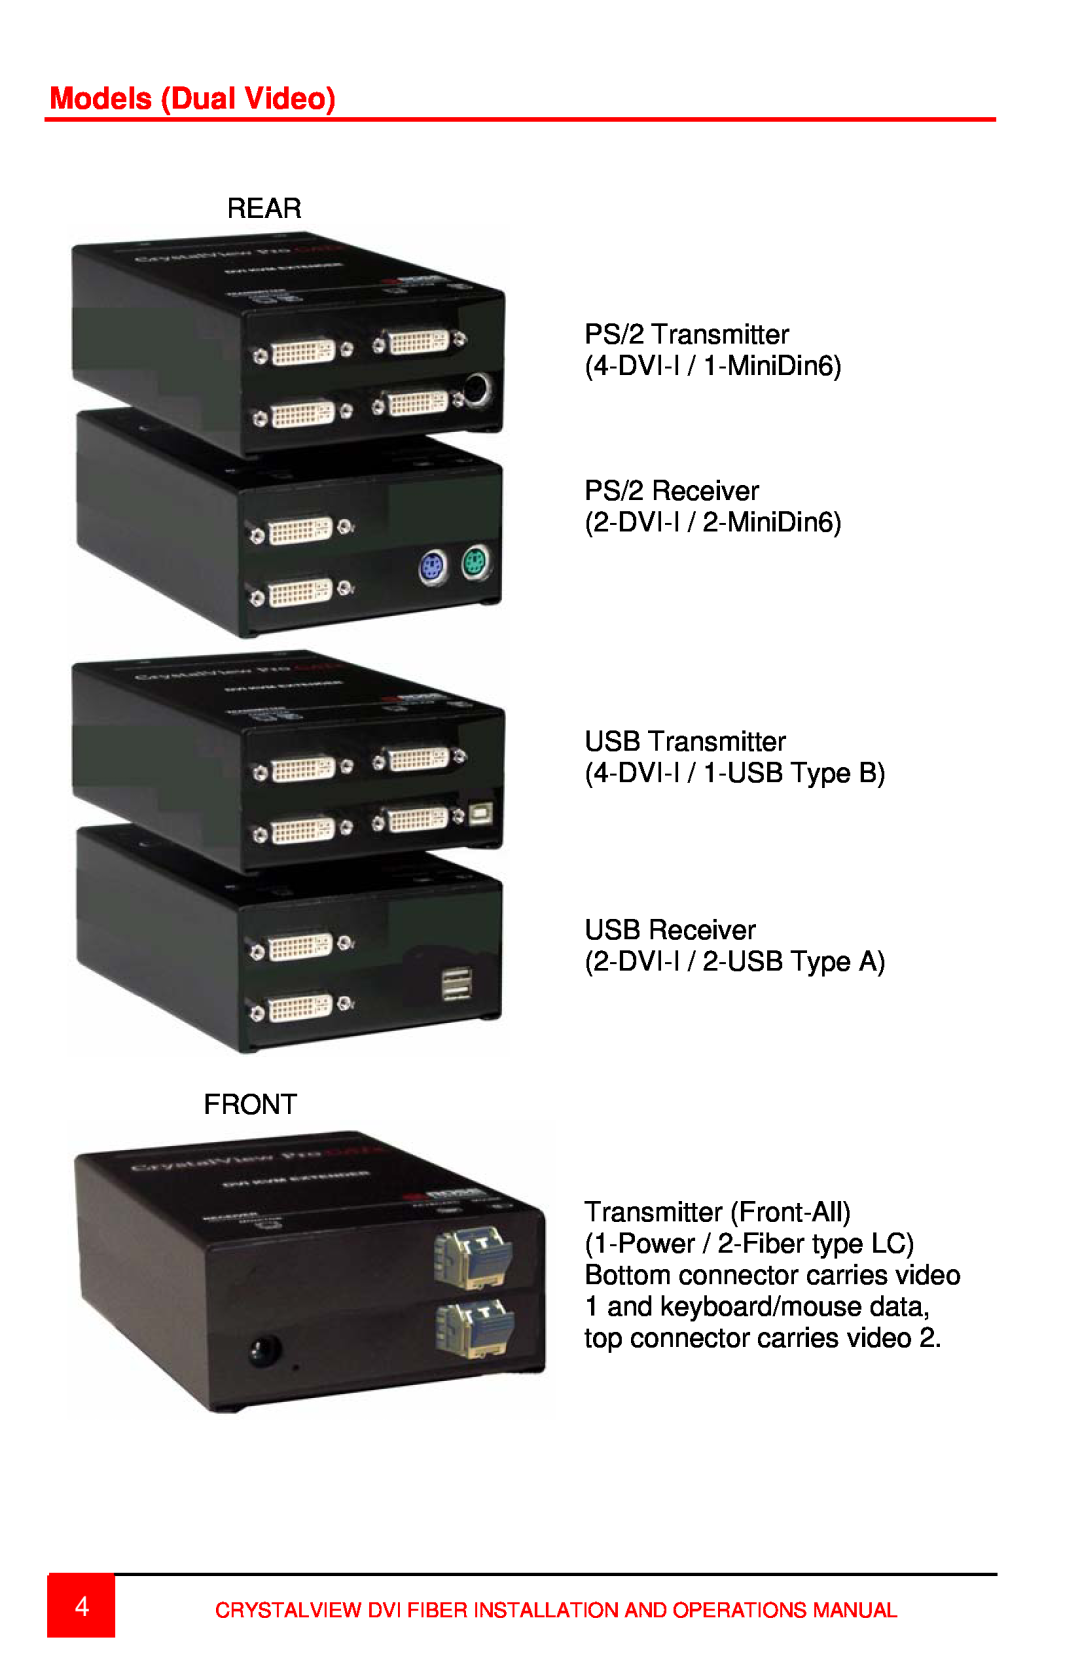 Rose electronic CRK-2DFMPD1D/3.2, CRK-2DFSPD2D, CRK-2DFSUD2D Models Dual Video, REAR PS/2 Transmitter 4-DVI-I / 1-MiniDin6 